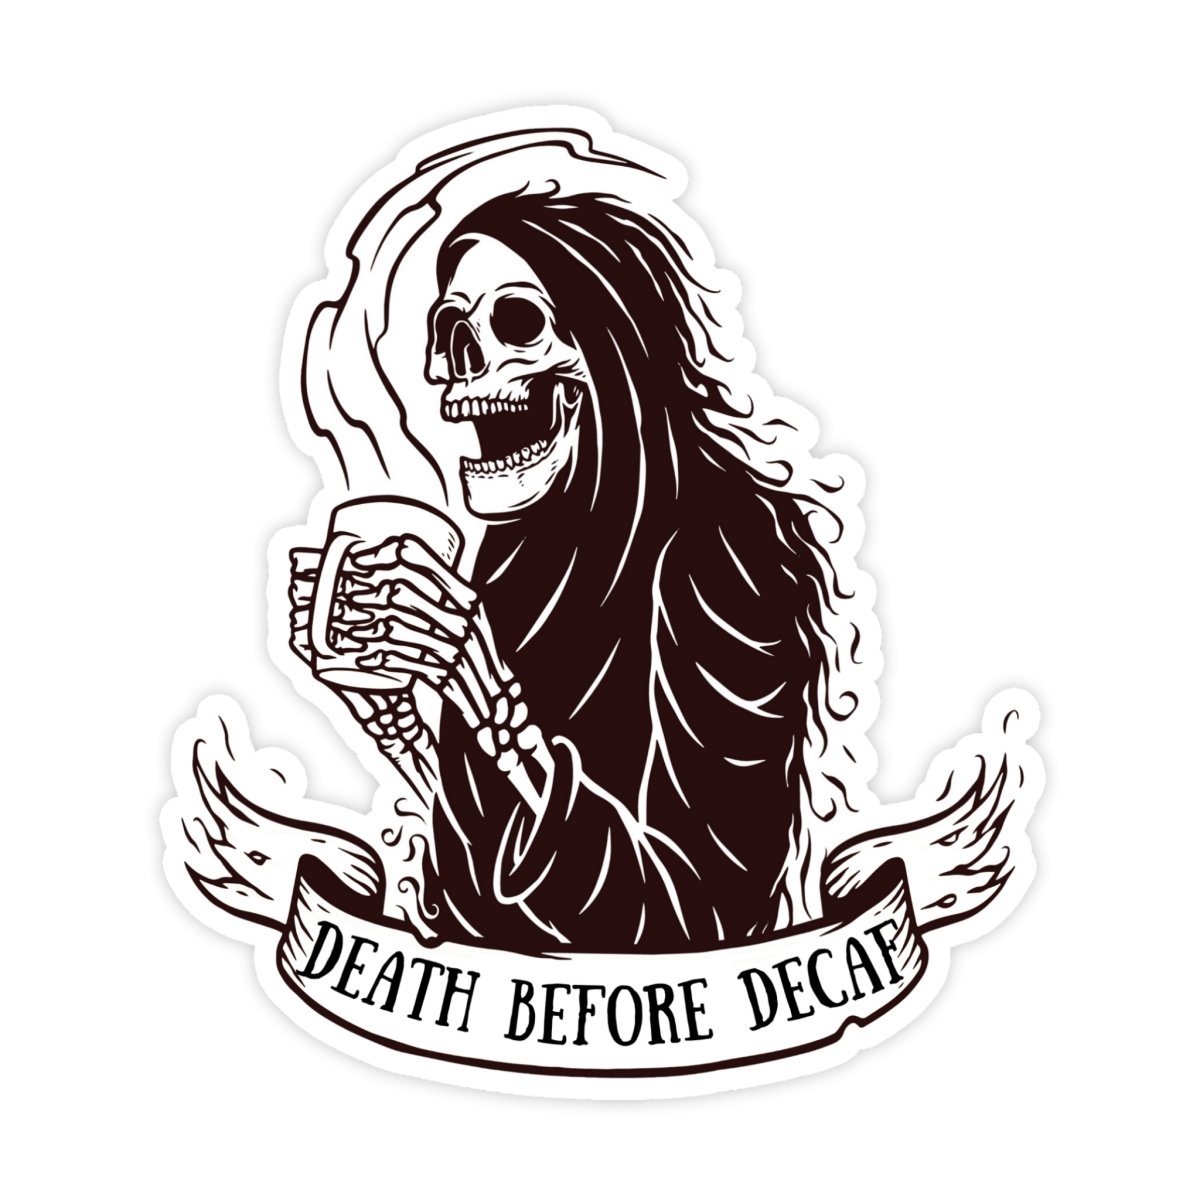 Death Before Decaf Coffee Sticker - stickerbullDeath Before Decaf Coffee StickerRetail StickerstickerbullstickerbullDeathDecaf_#214Death Before Decaf Coffee Sticker